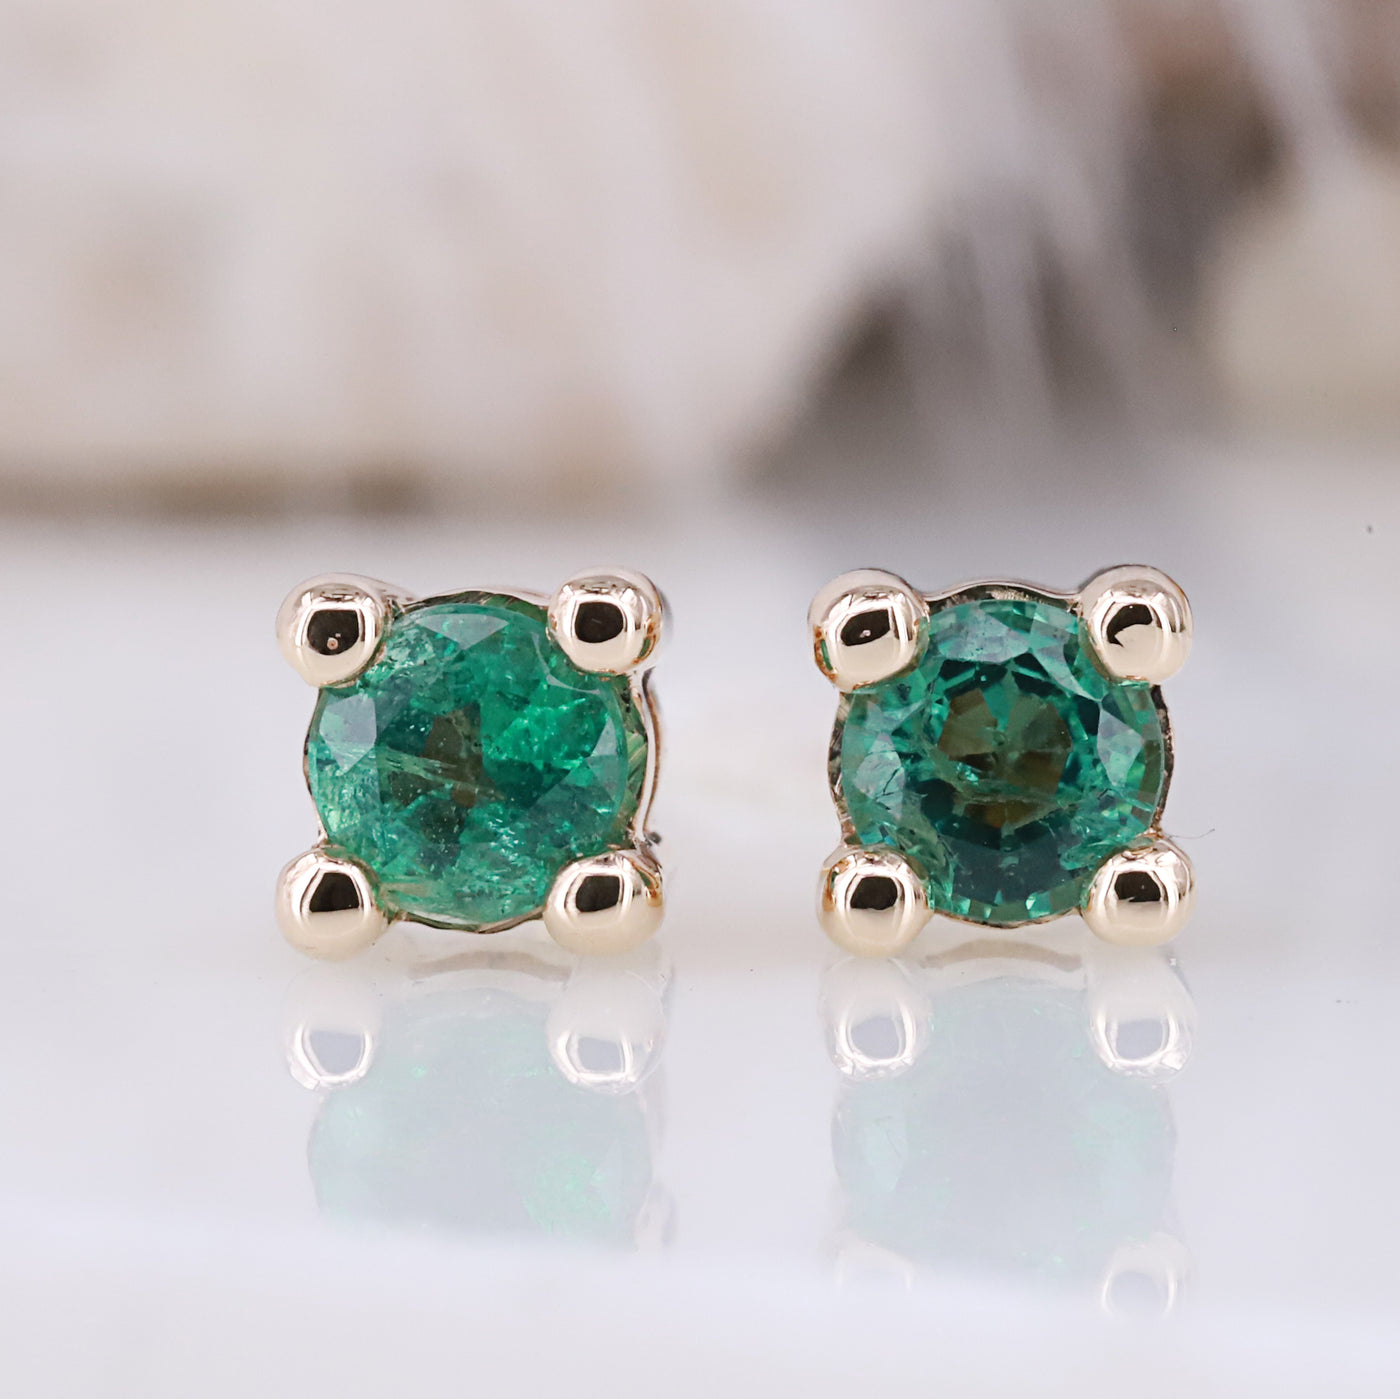 Emerald color earrings emerald earrings gold hoop earrings stud earrings